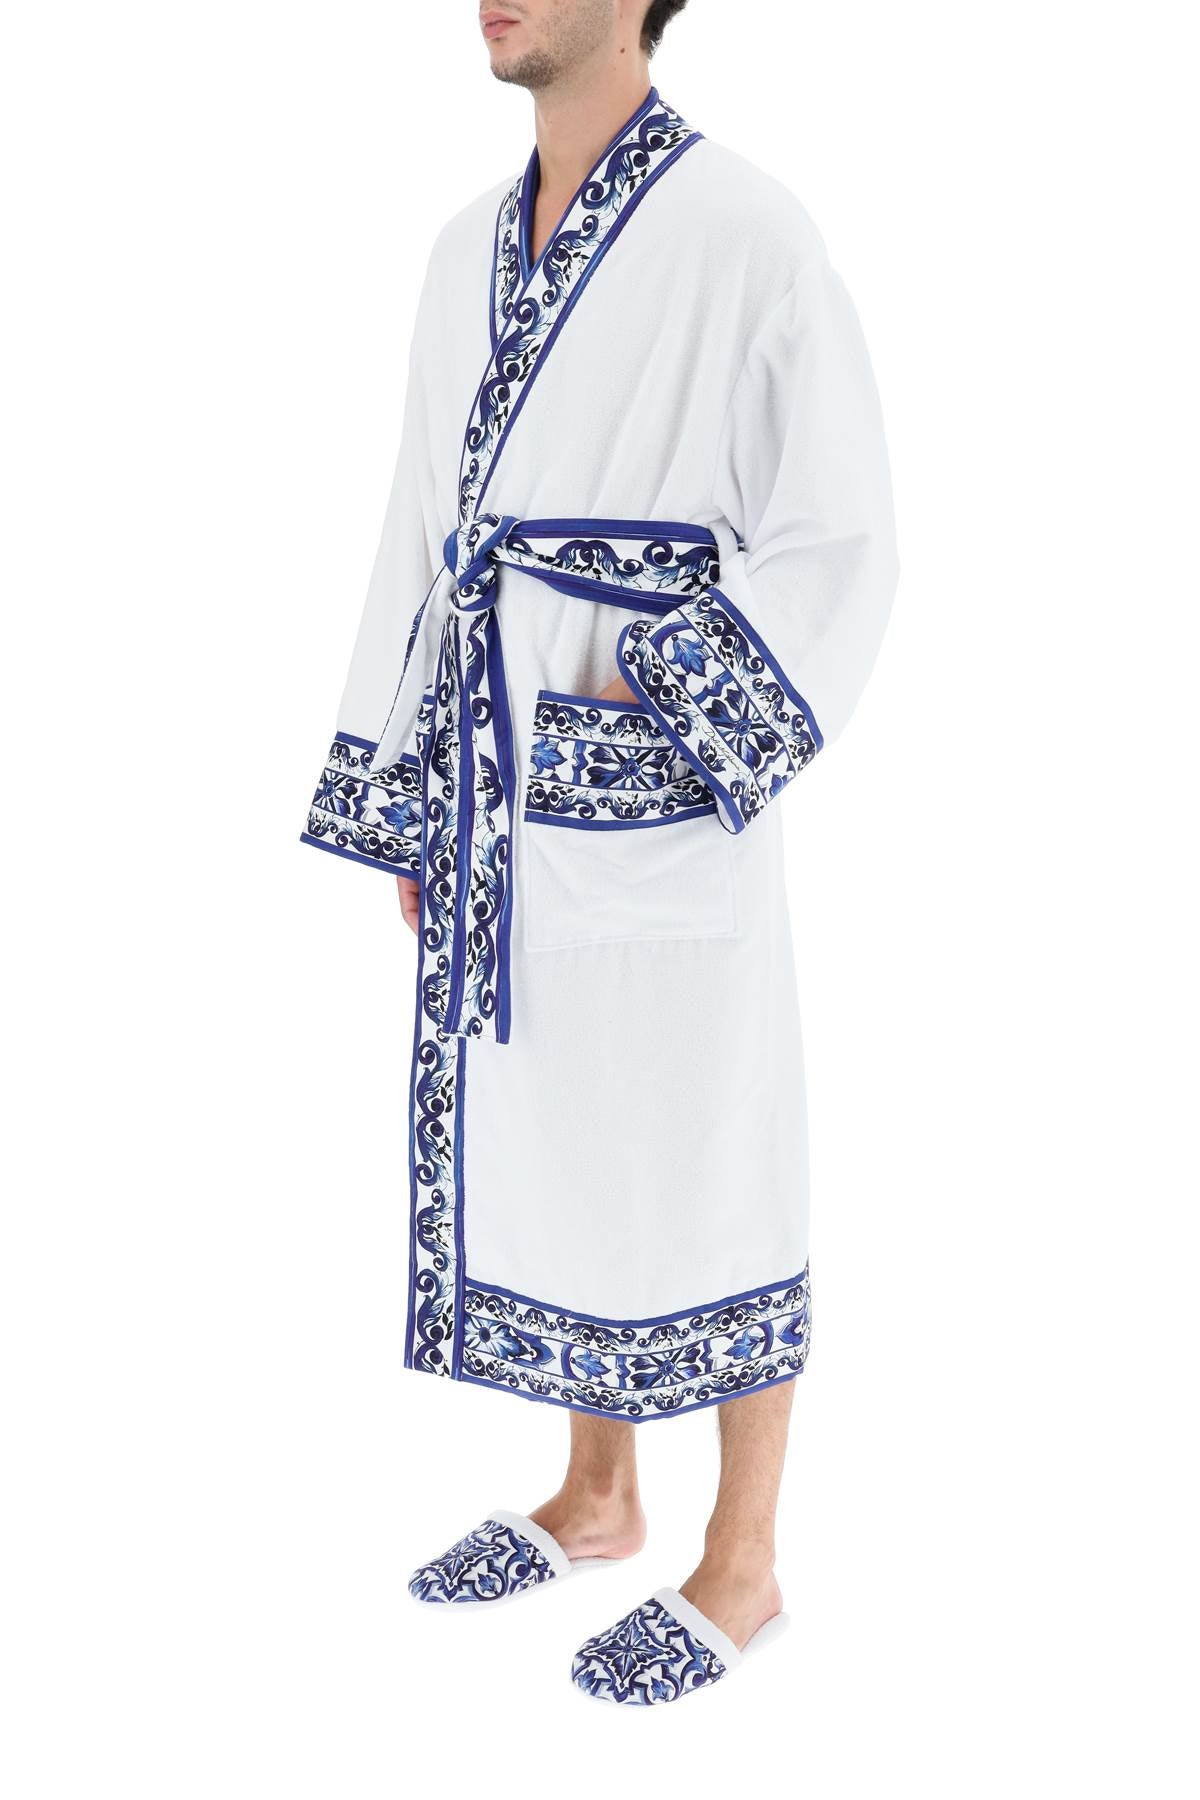 Dolce & gabbana 'blu mediterraneo' bathrobe-3